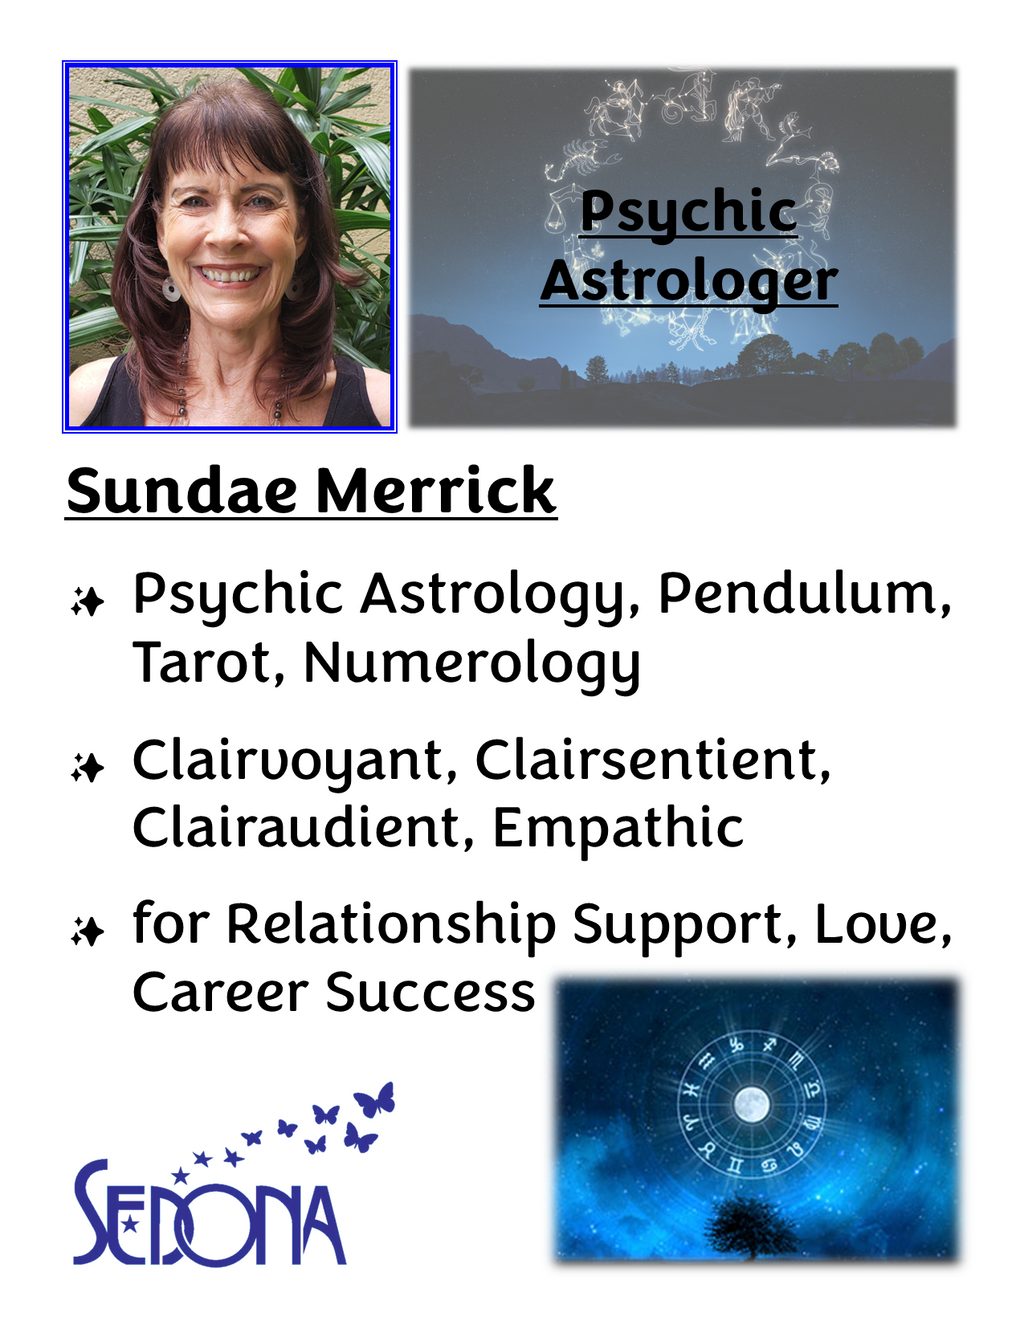 Psychic Fair Readings with Sundae Merrick